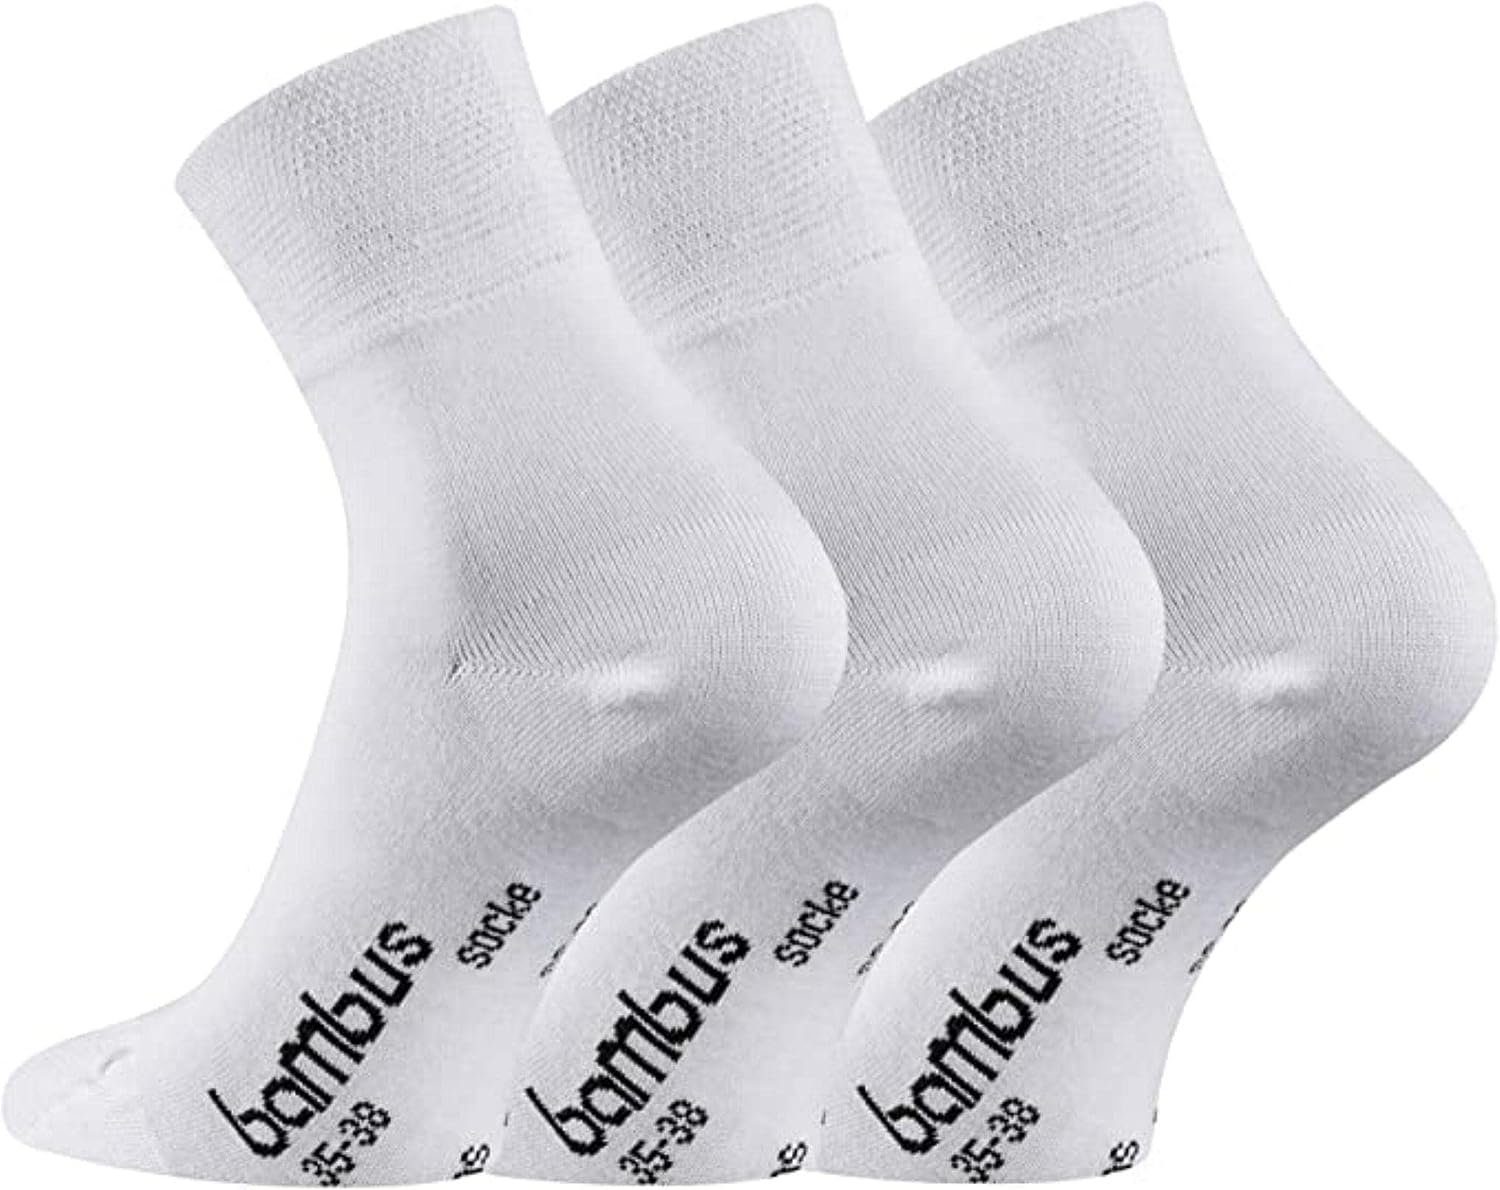 FussFreunde Kurzsocken 6 Weiß Bambus-Socken, Quarter Socken und ANTI-LOCH-GARANTIE Paar kurze